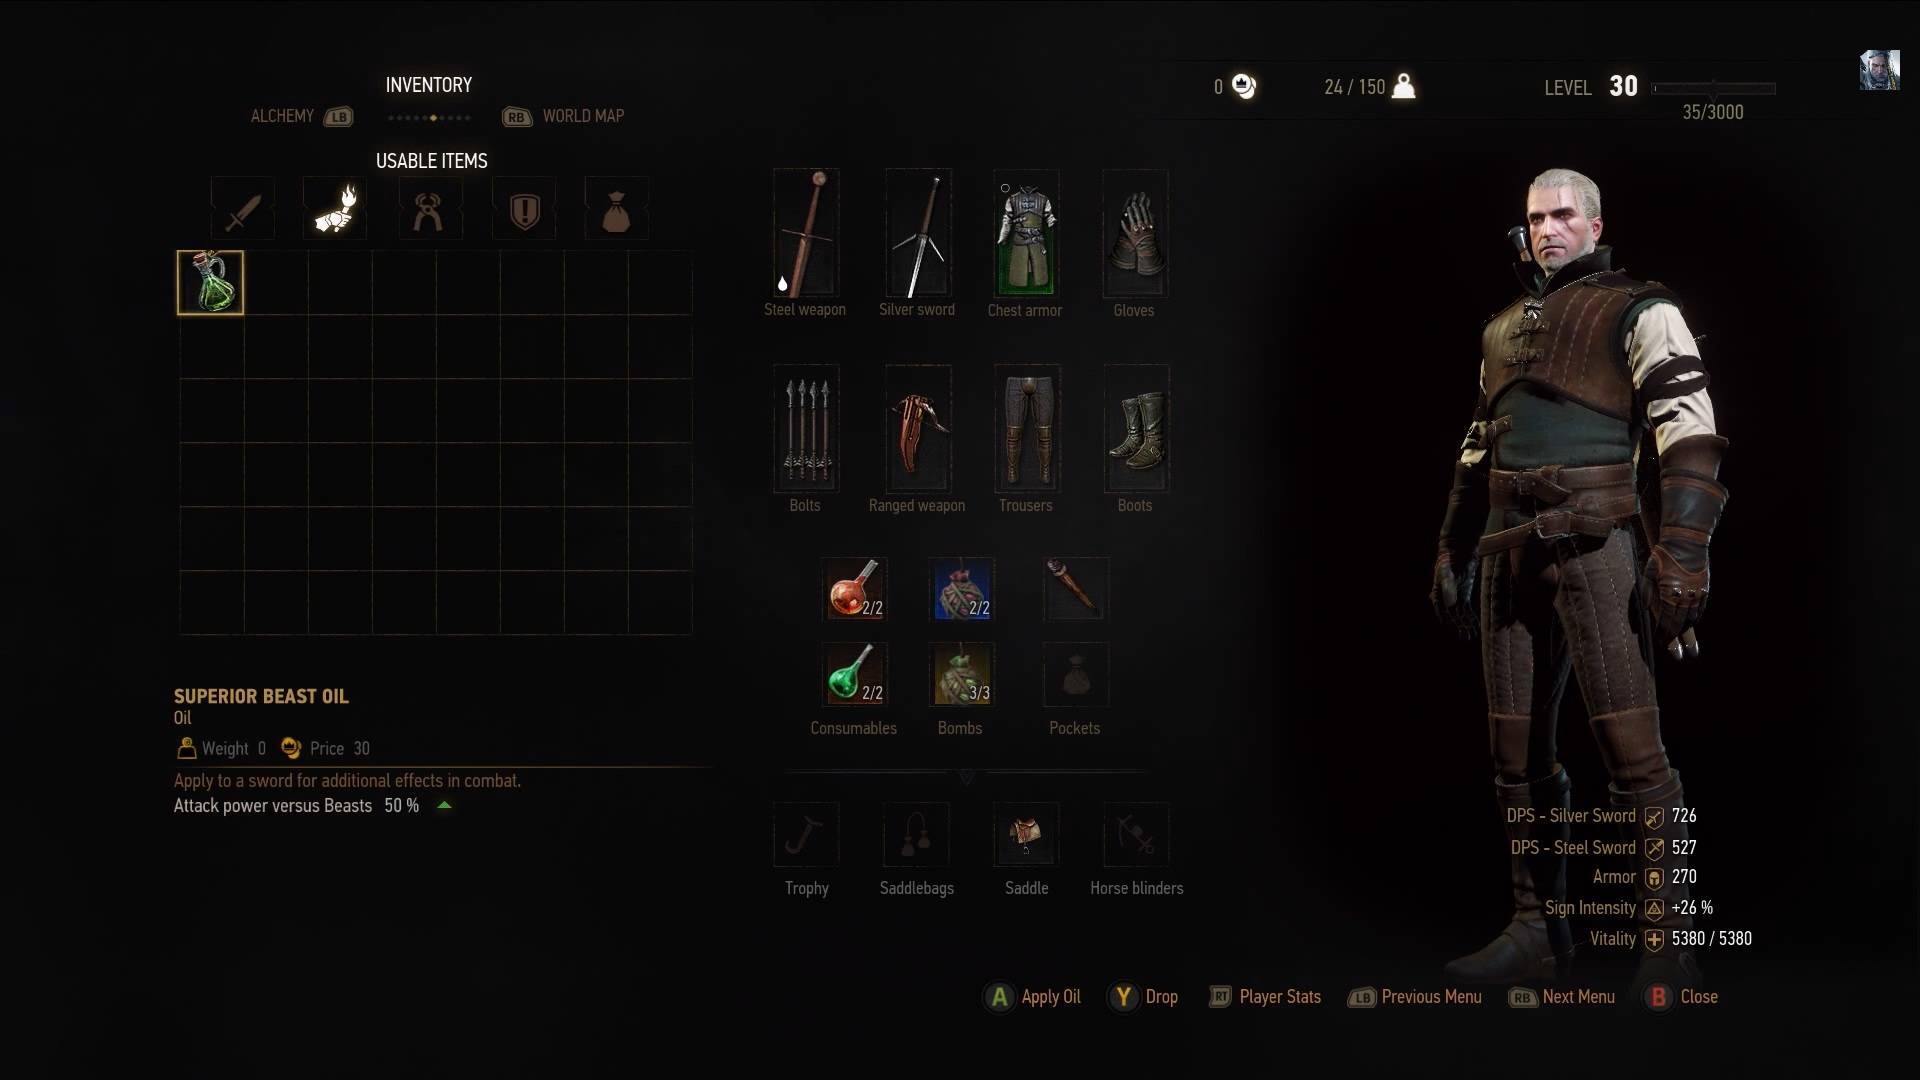 Witcher 3: Wild Hunt Inventory user interface